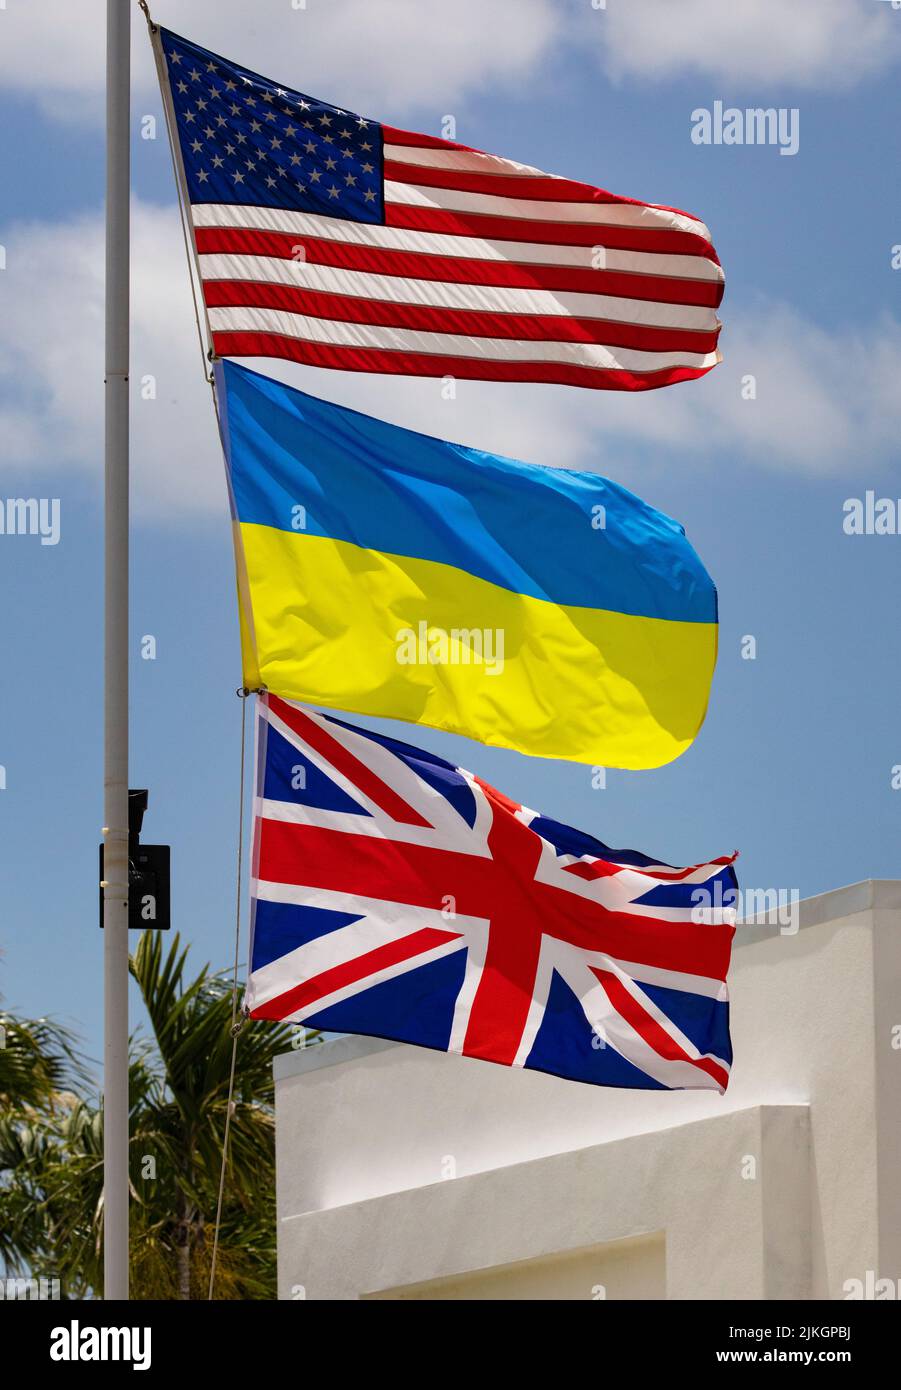 Flags of three nations, United States, Ukraine, and United Kingdom, on white flagpole Stock Photo